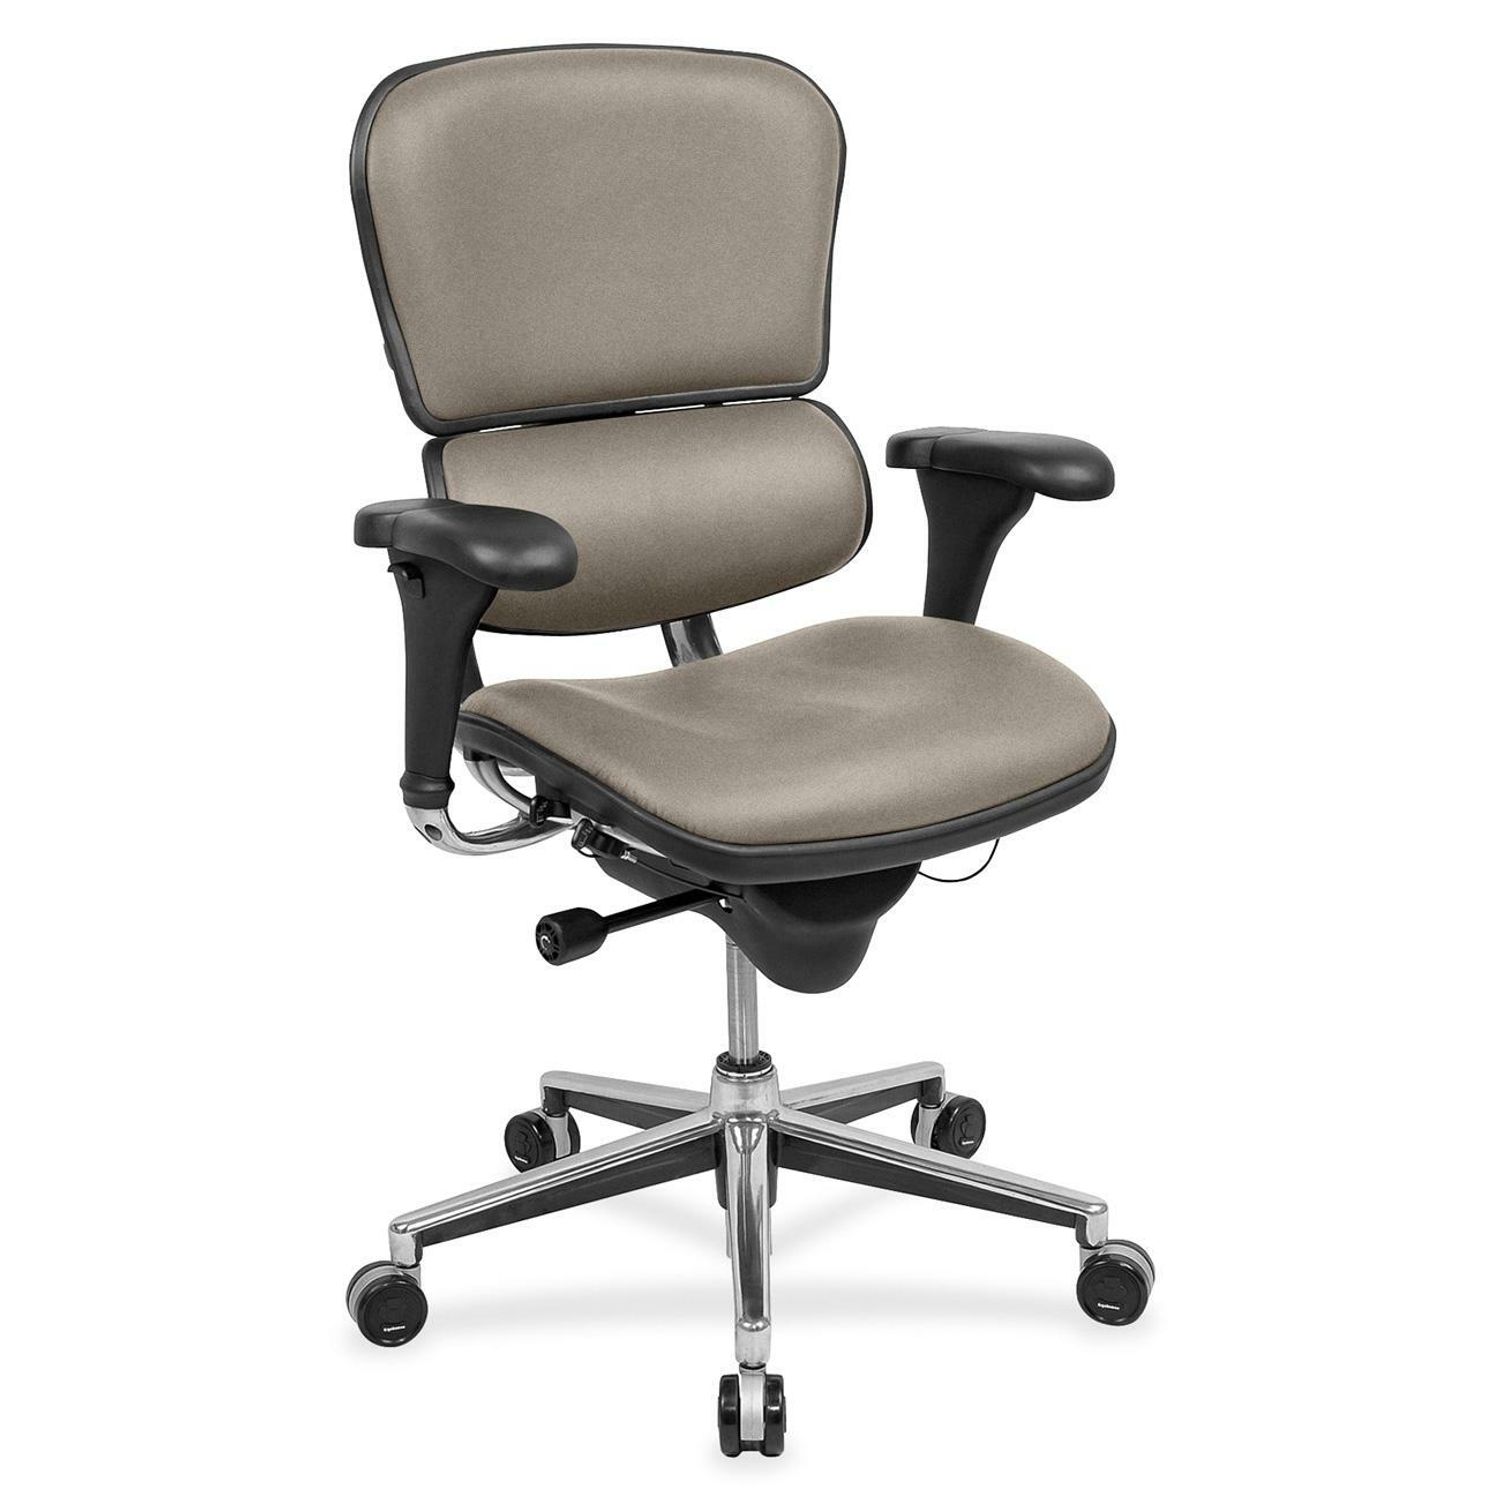 Ergohuman Executive Chair Fossil Insight Fabric Seat, Fossil Insight Fabric Back, 5-star Base, 1 Each